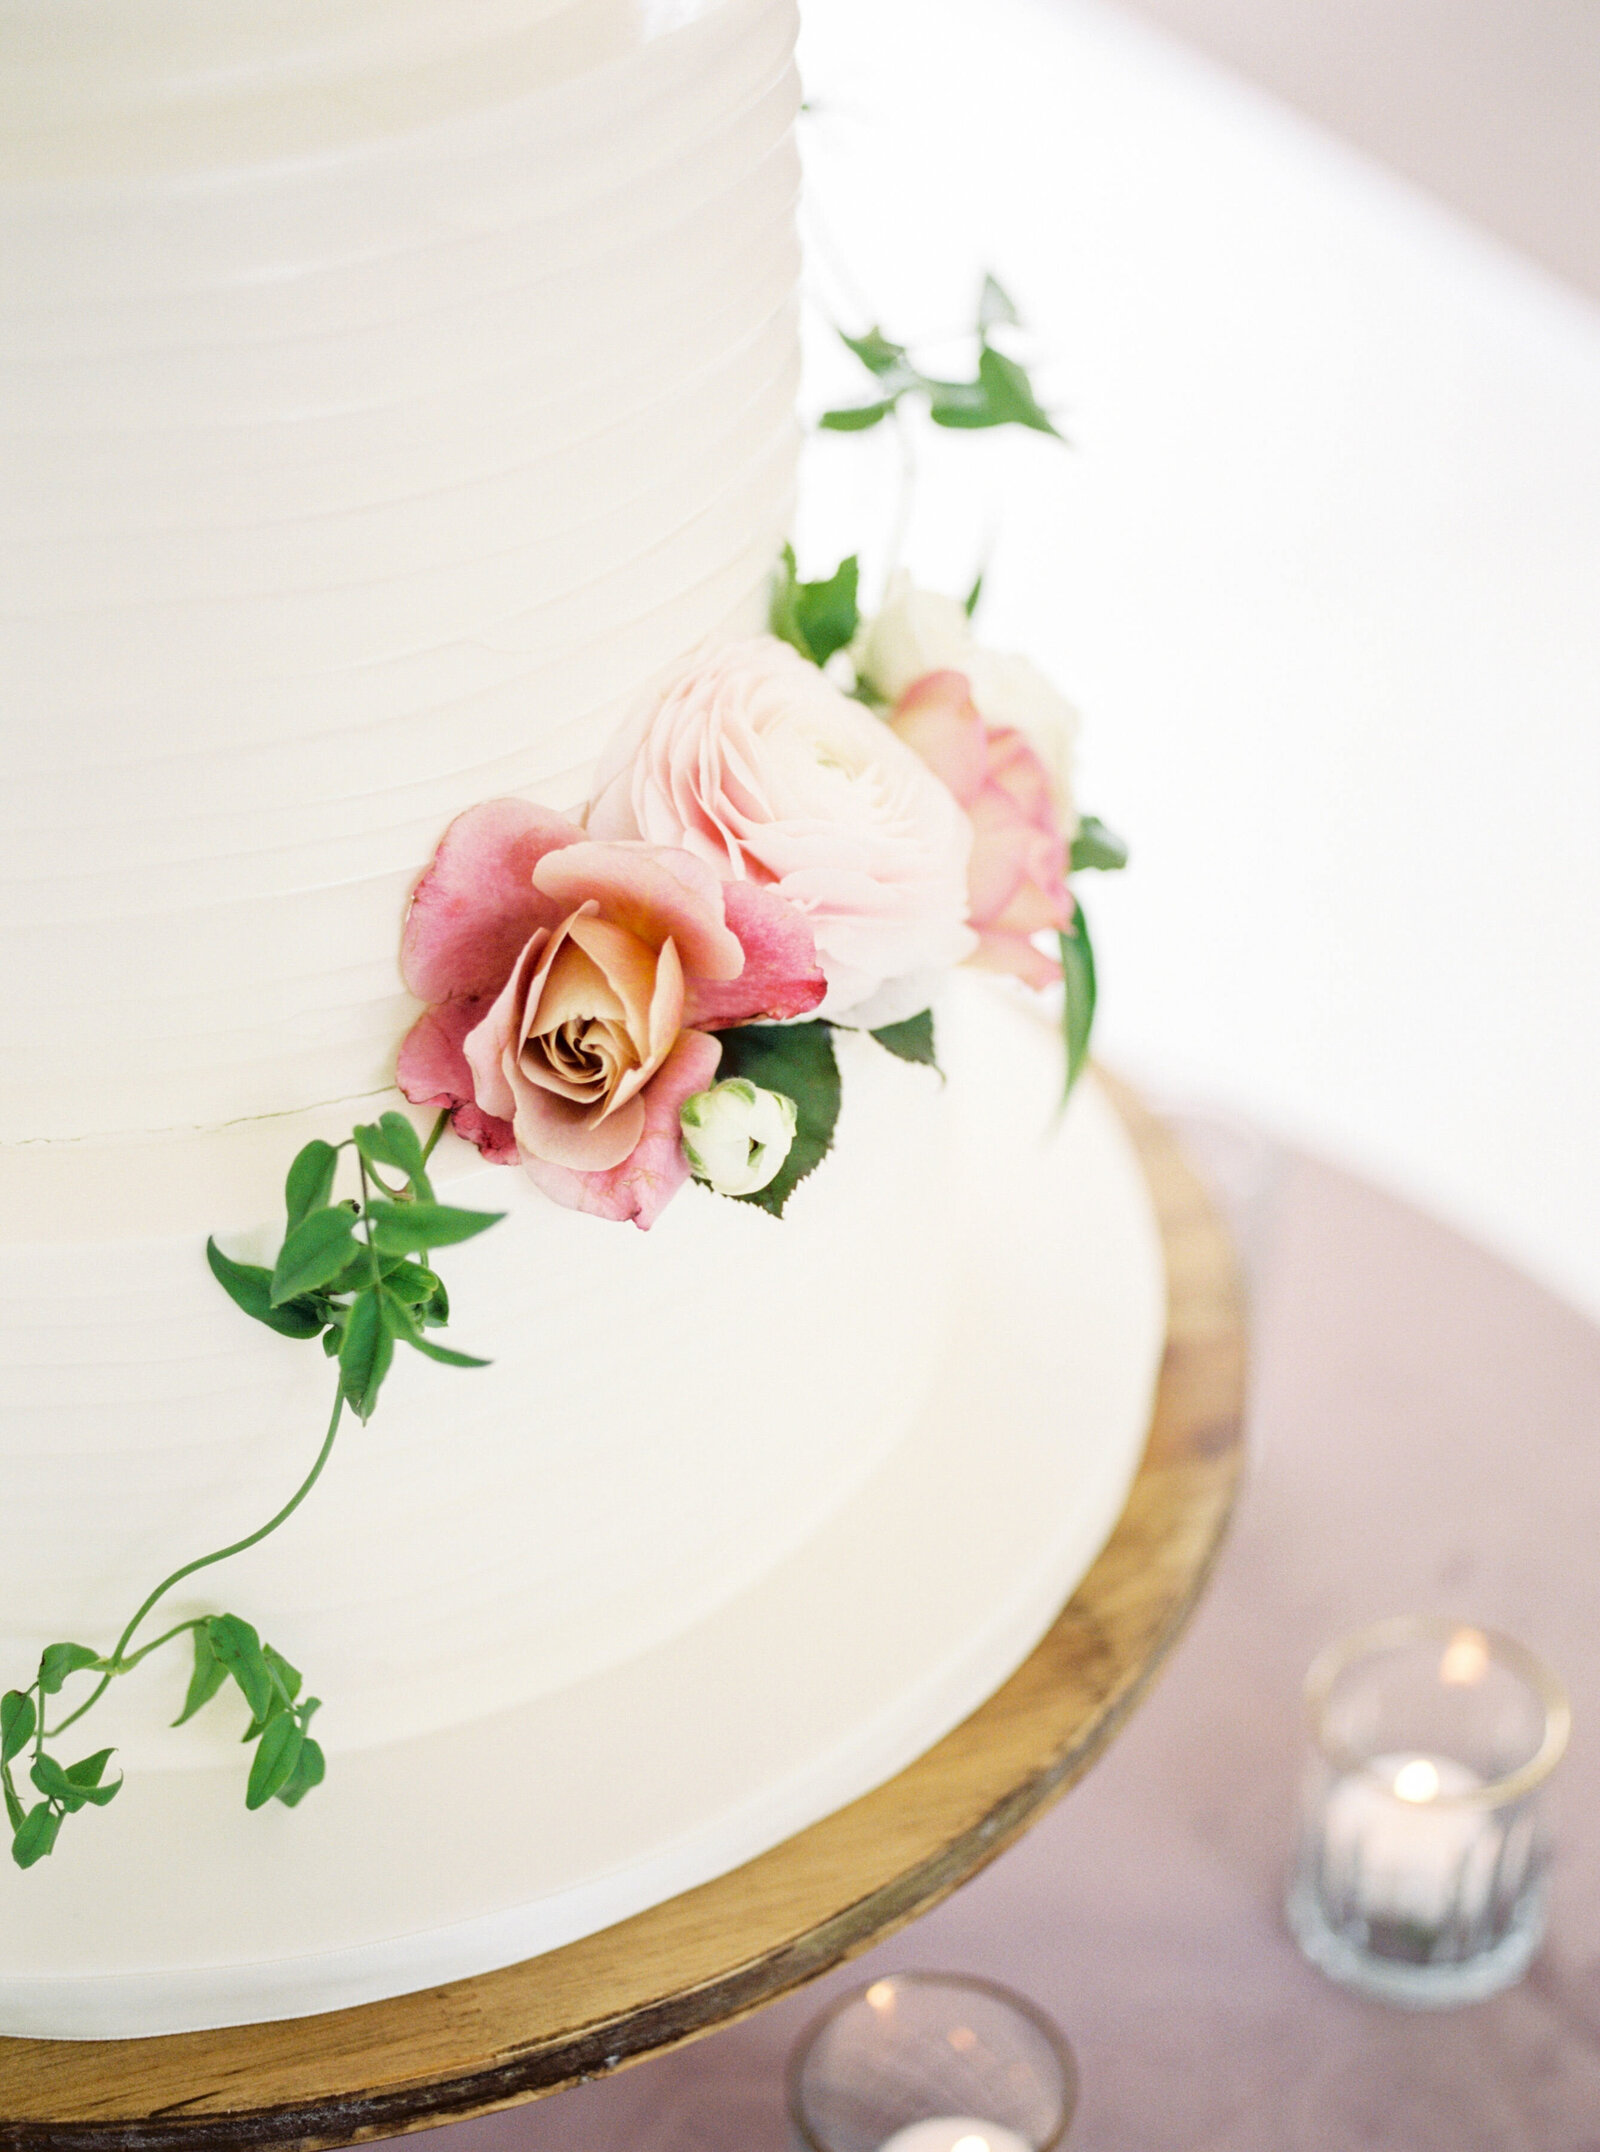 055-sean-cook-wedding-photography-flower-cake-detail